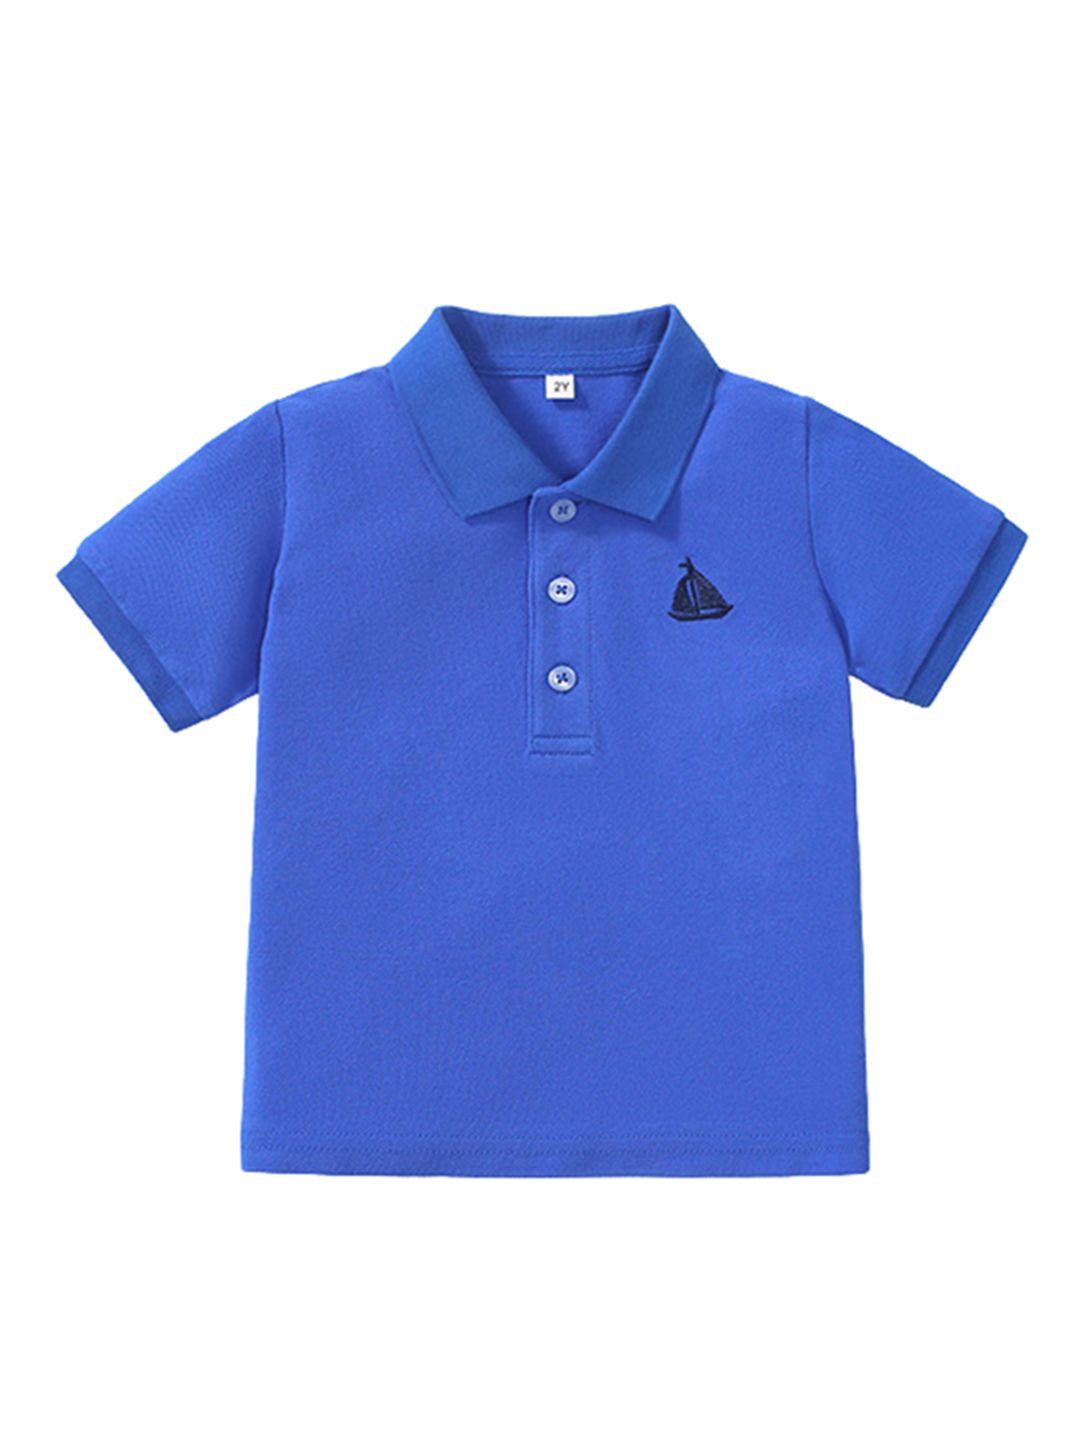 stylecast blue cotton shirt style top